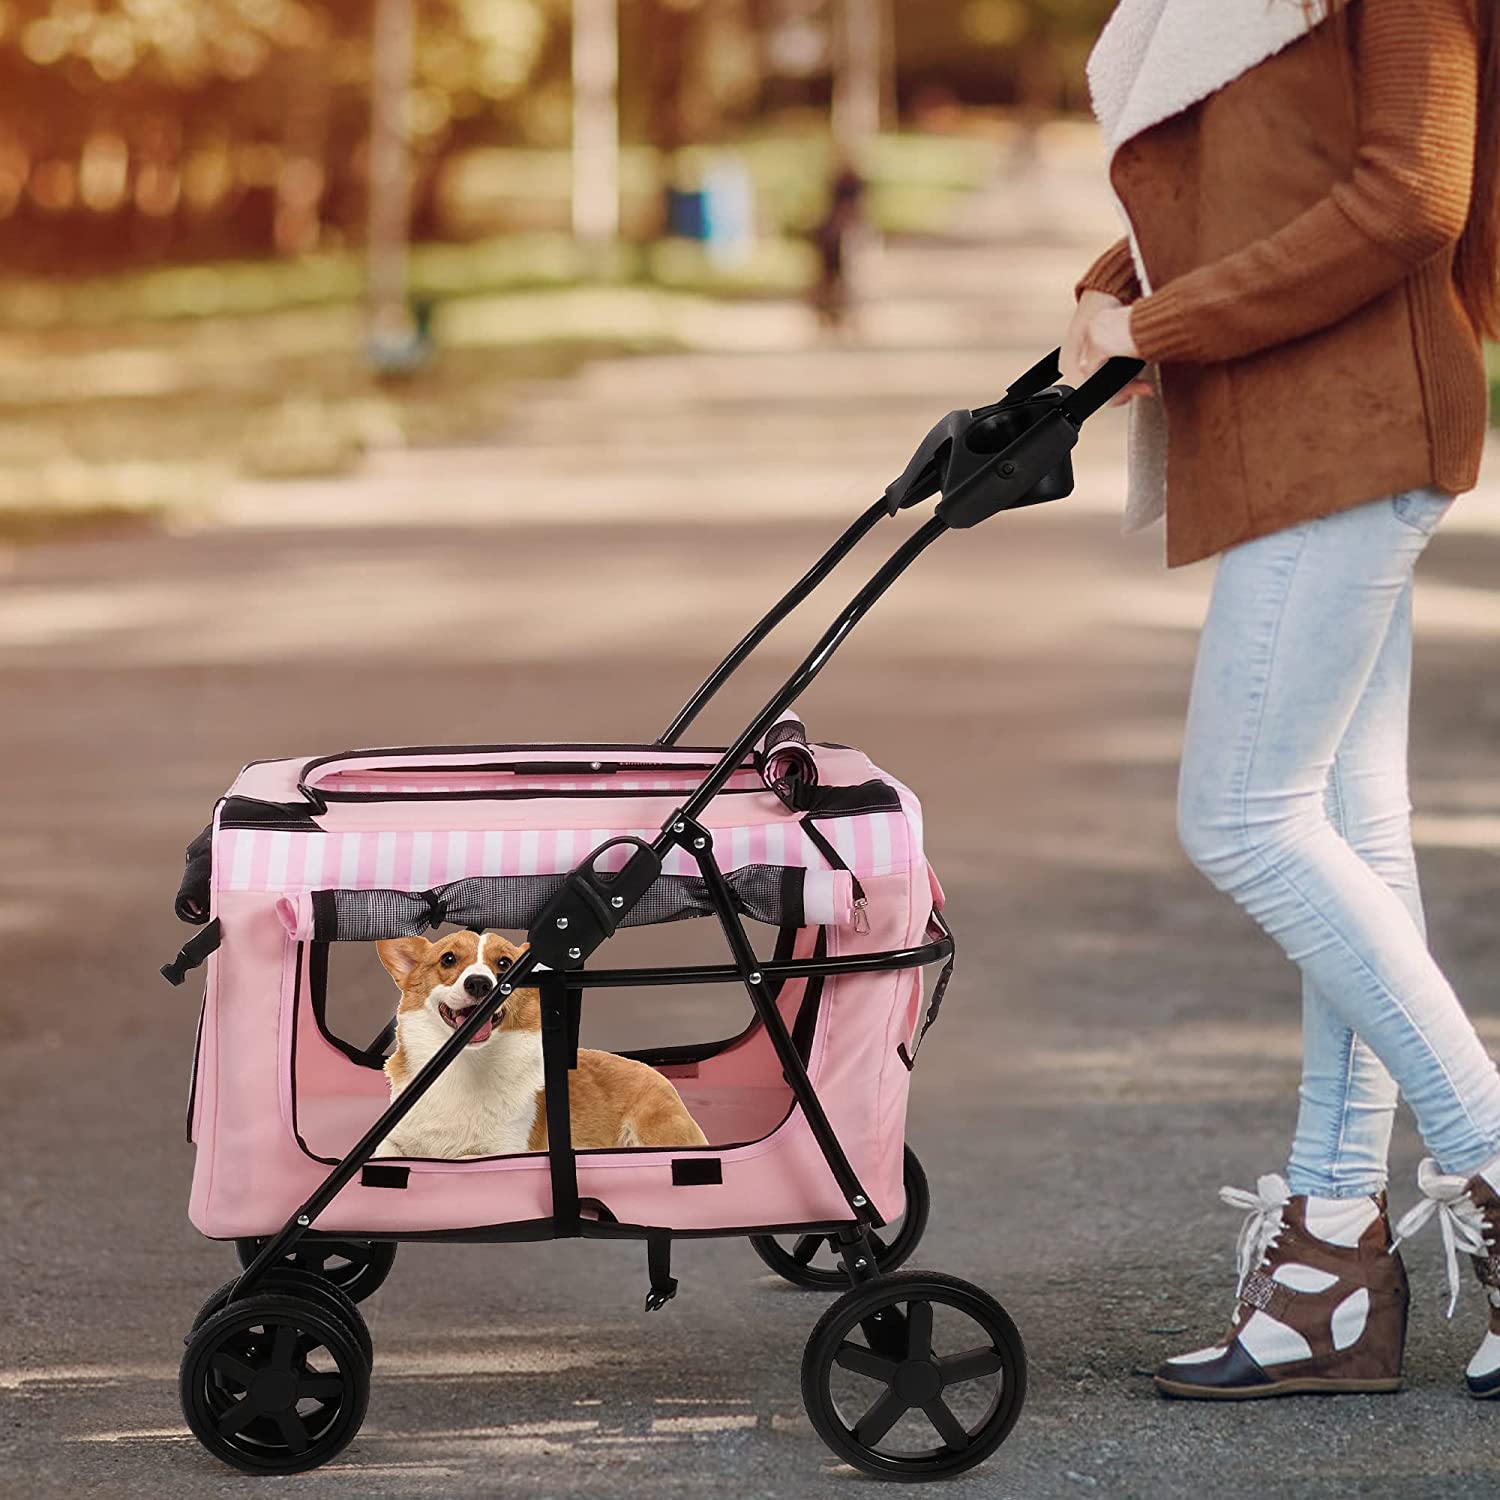 3-in-1 Folding Pet Stroller Travel Pet Gear Stroller with Detachable Carrier Bag & Water Cup Holder, Pink - Bosonshop